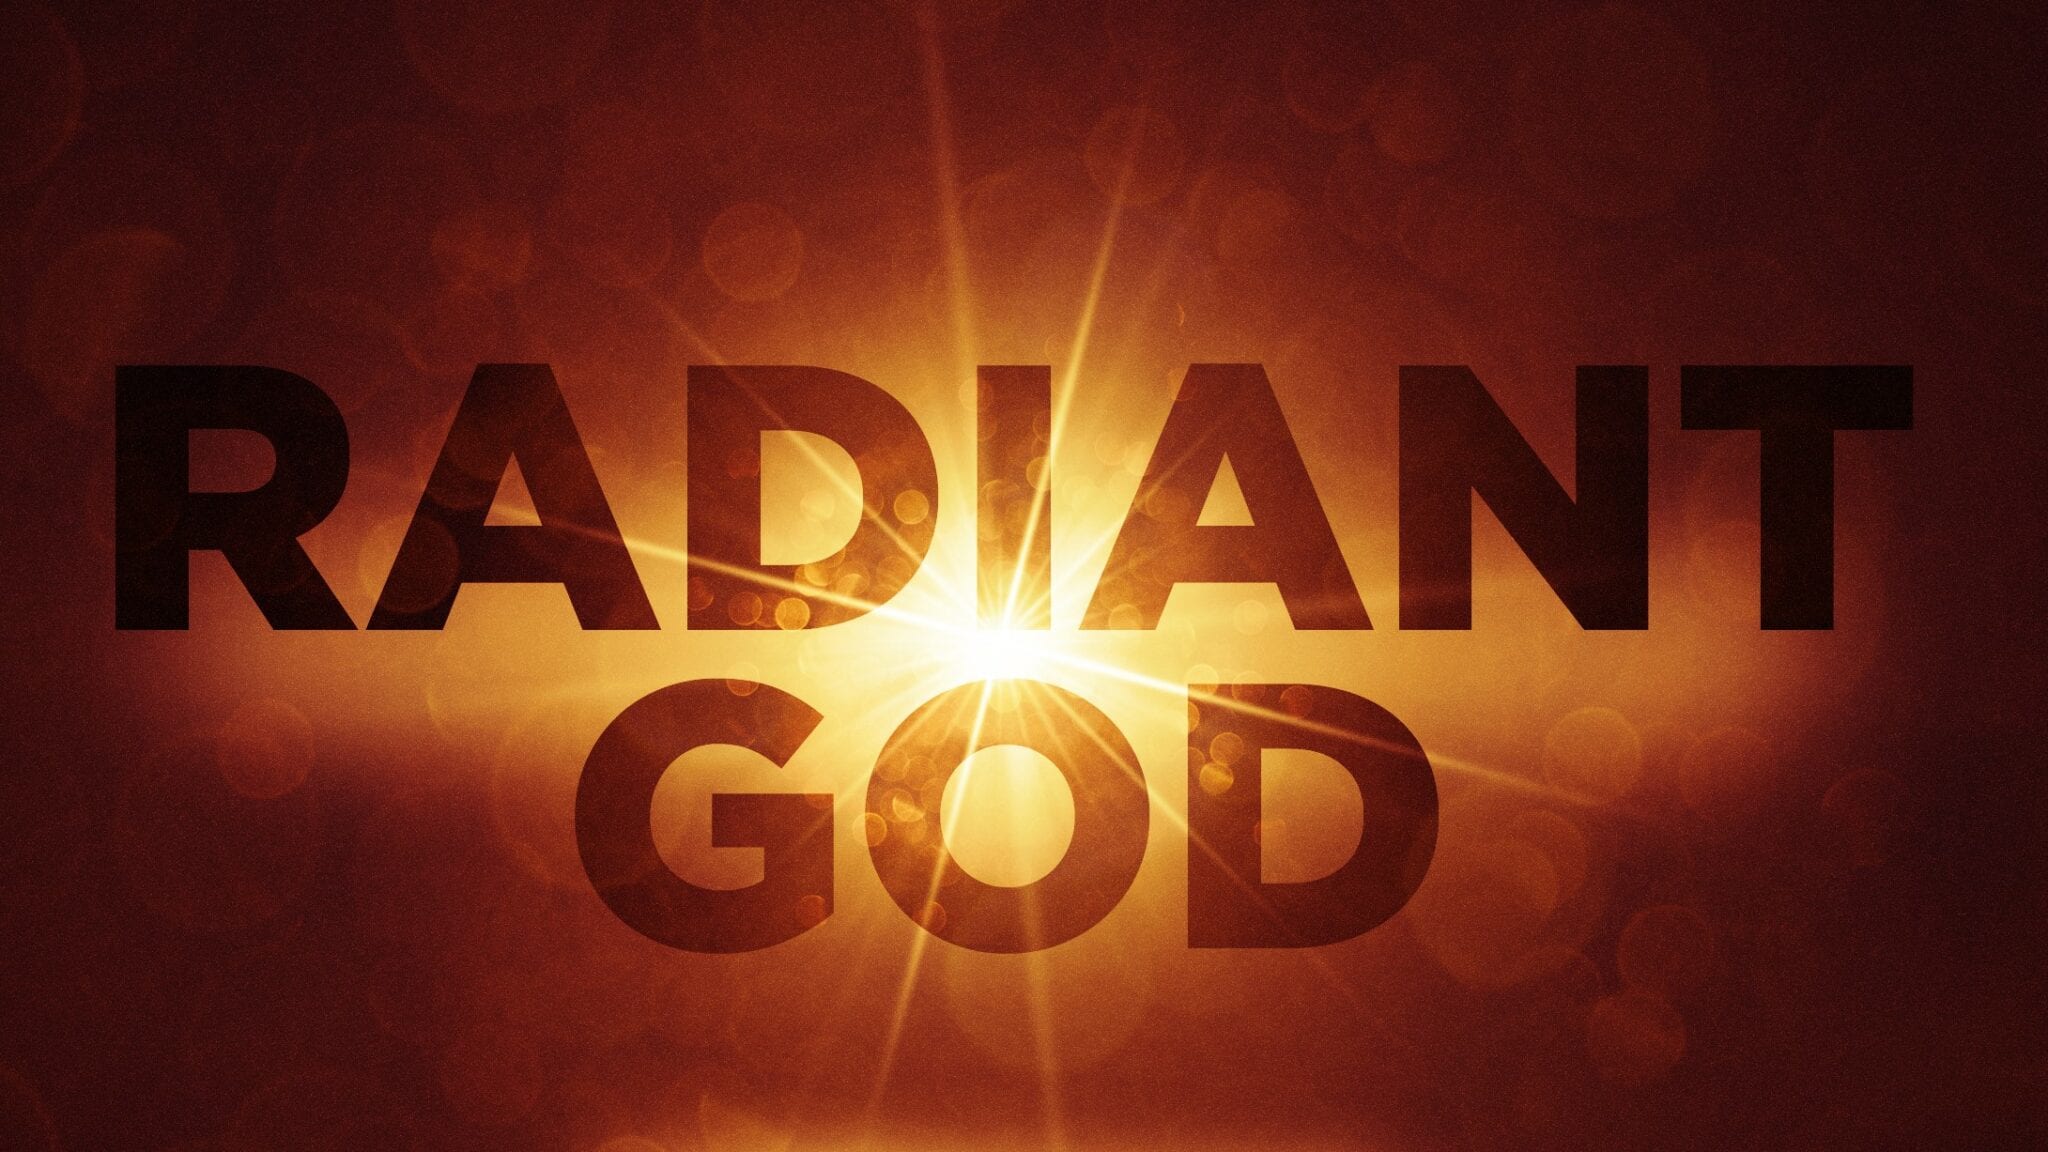 Radiant God: Deception